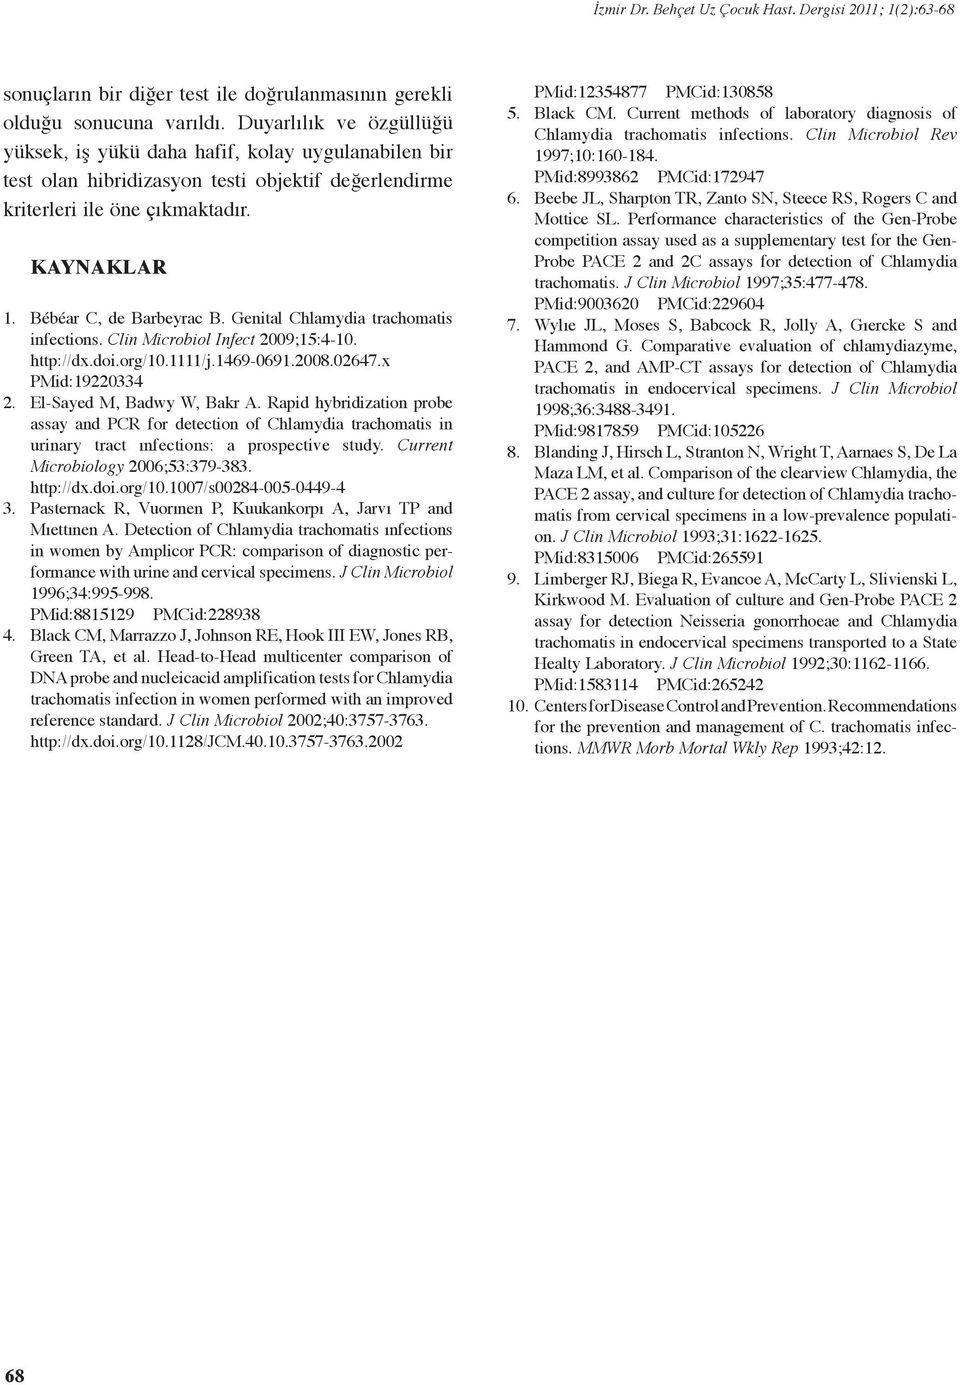 Genital Chlamydia trachomatis infections. Clin Microbiol Infect 2009;15:4-10. http://dx.doi.org/10.1111/j.1469-0691.2008.02647.x PMid:19220334 2. El-Sayed M, Badwy W, Bakr A.